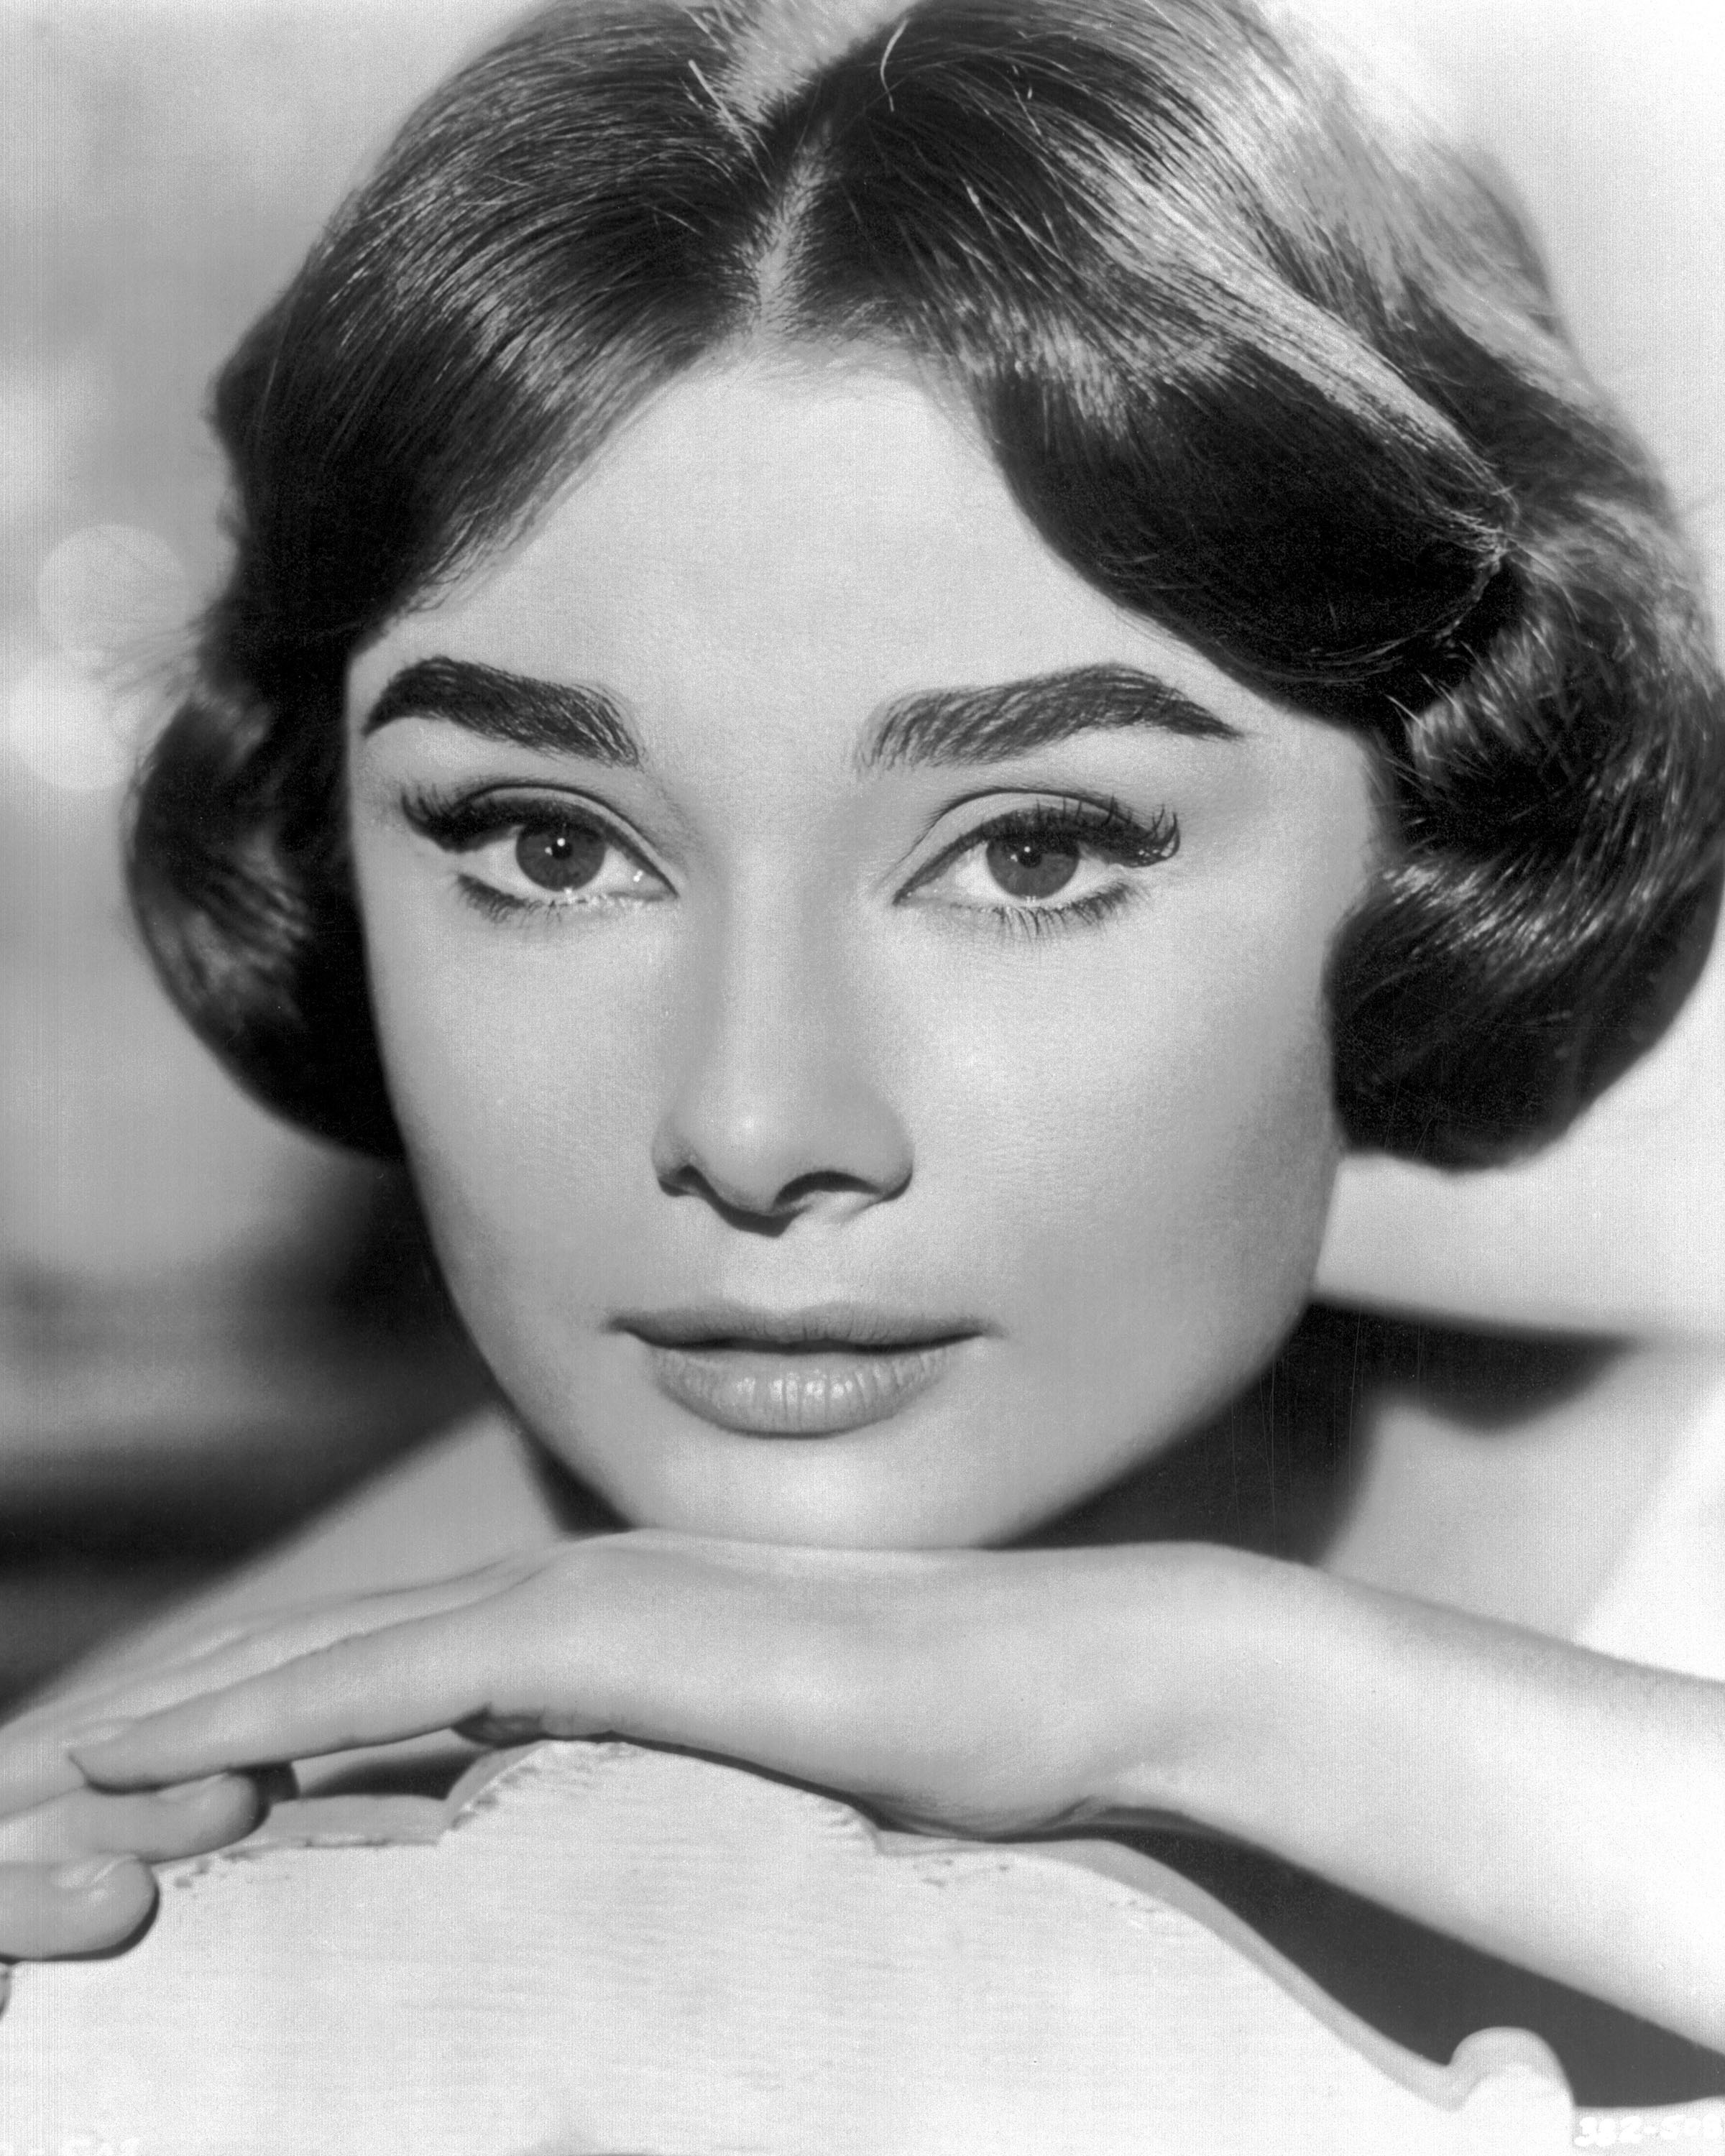 A portrait of Audrey Hepburn taken in 1955 | Source: Getty Images